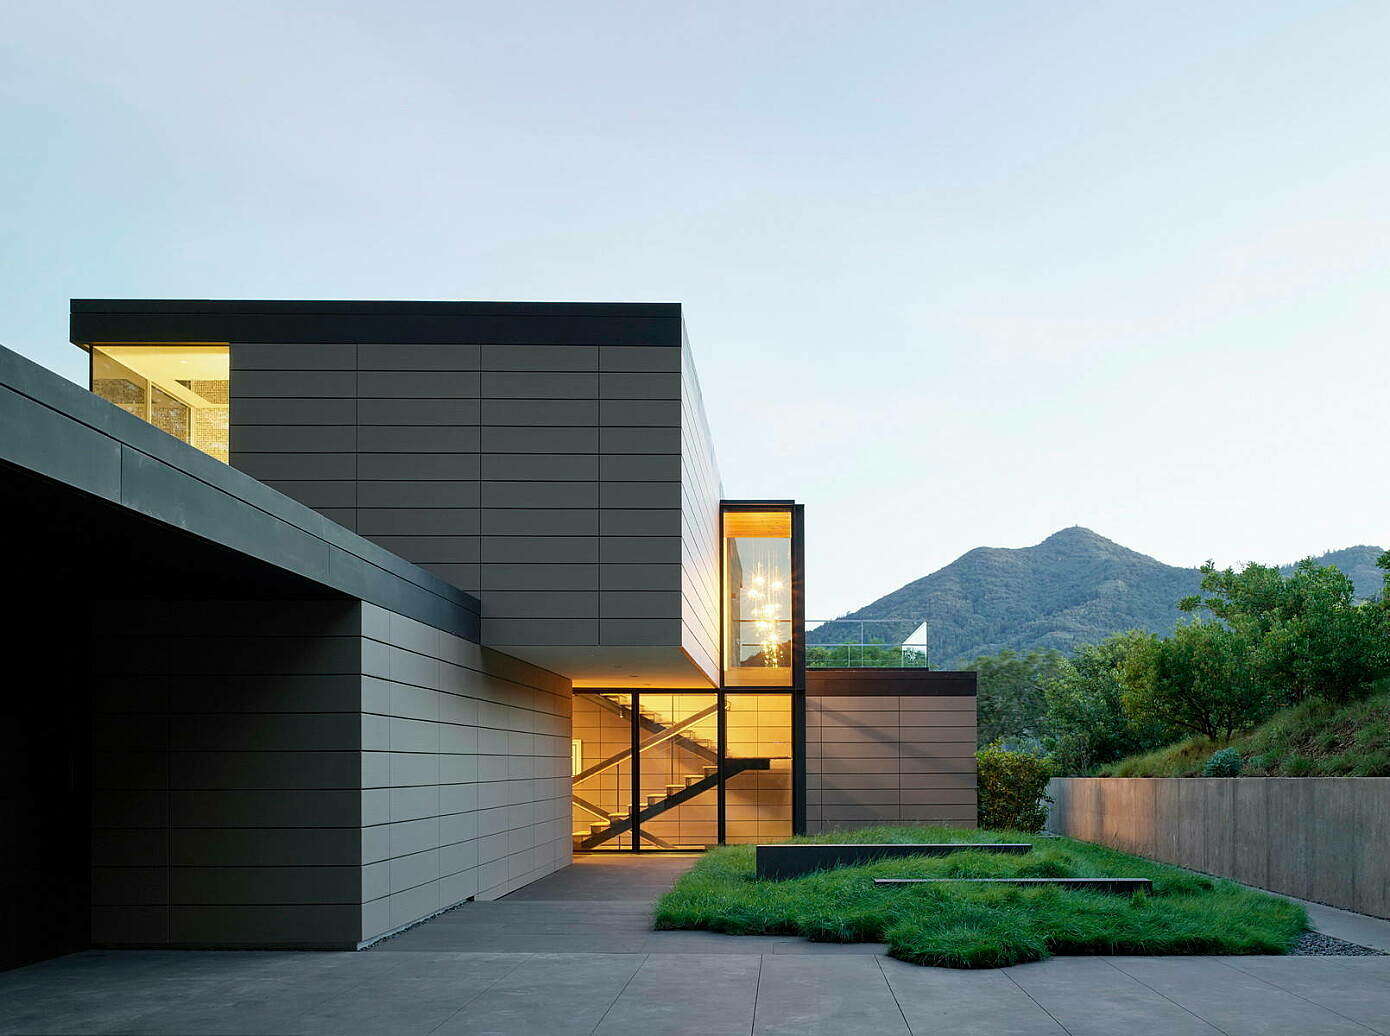 Spring Road Residence by Ehrlich Yanai Rhee Chaney Architects